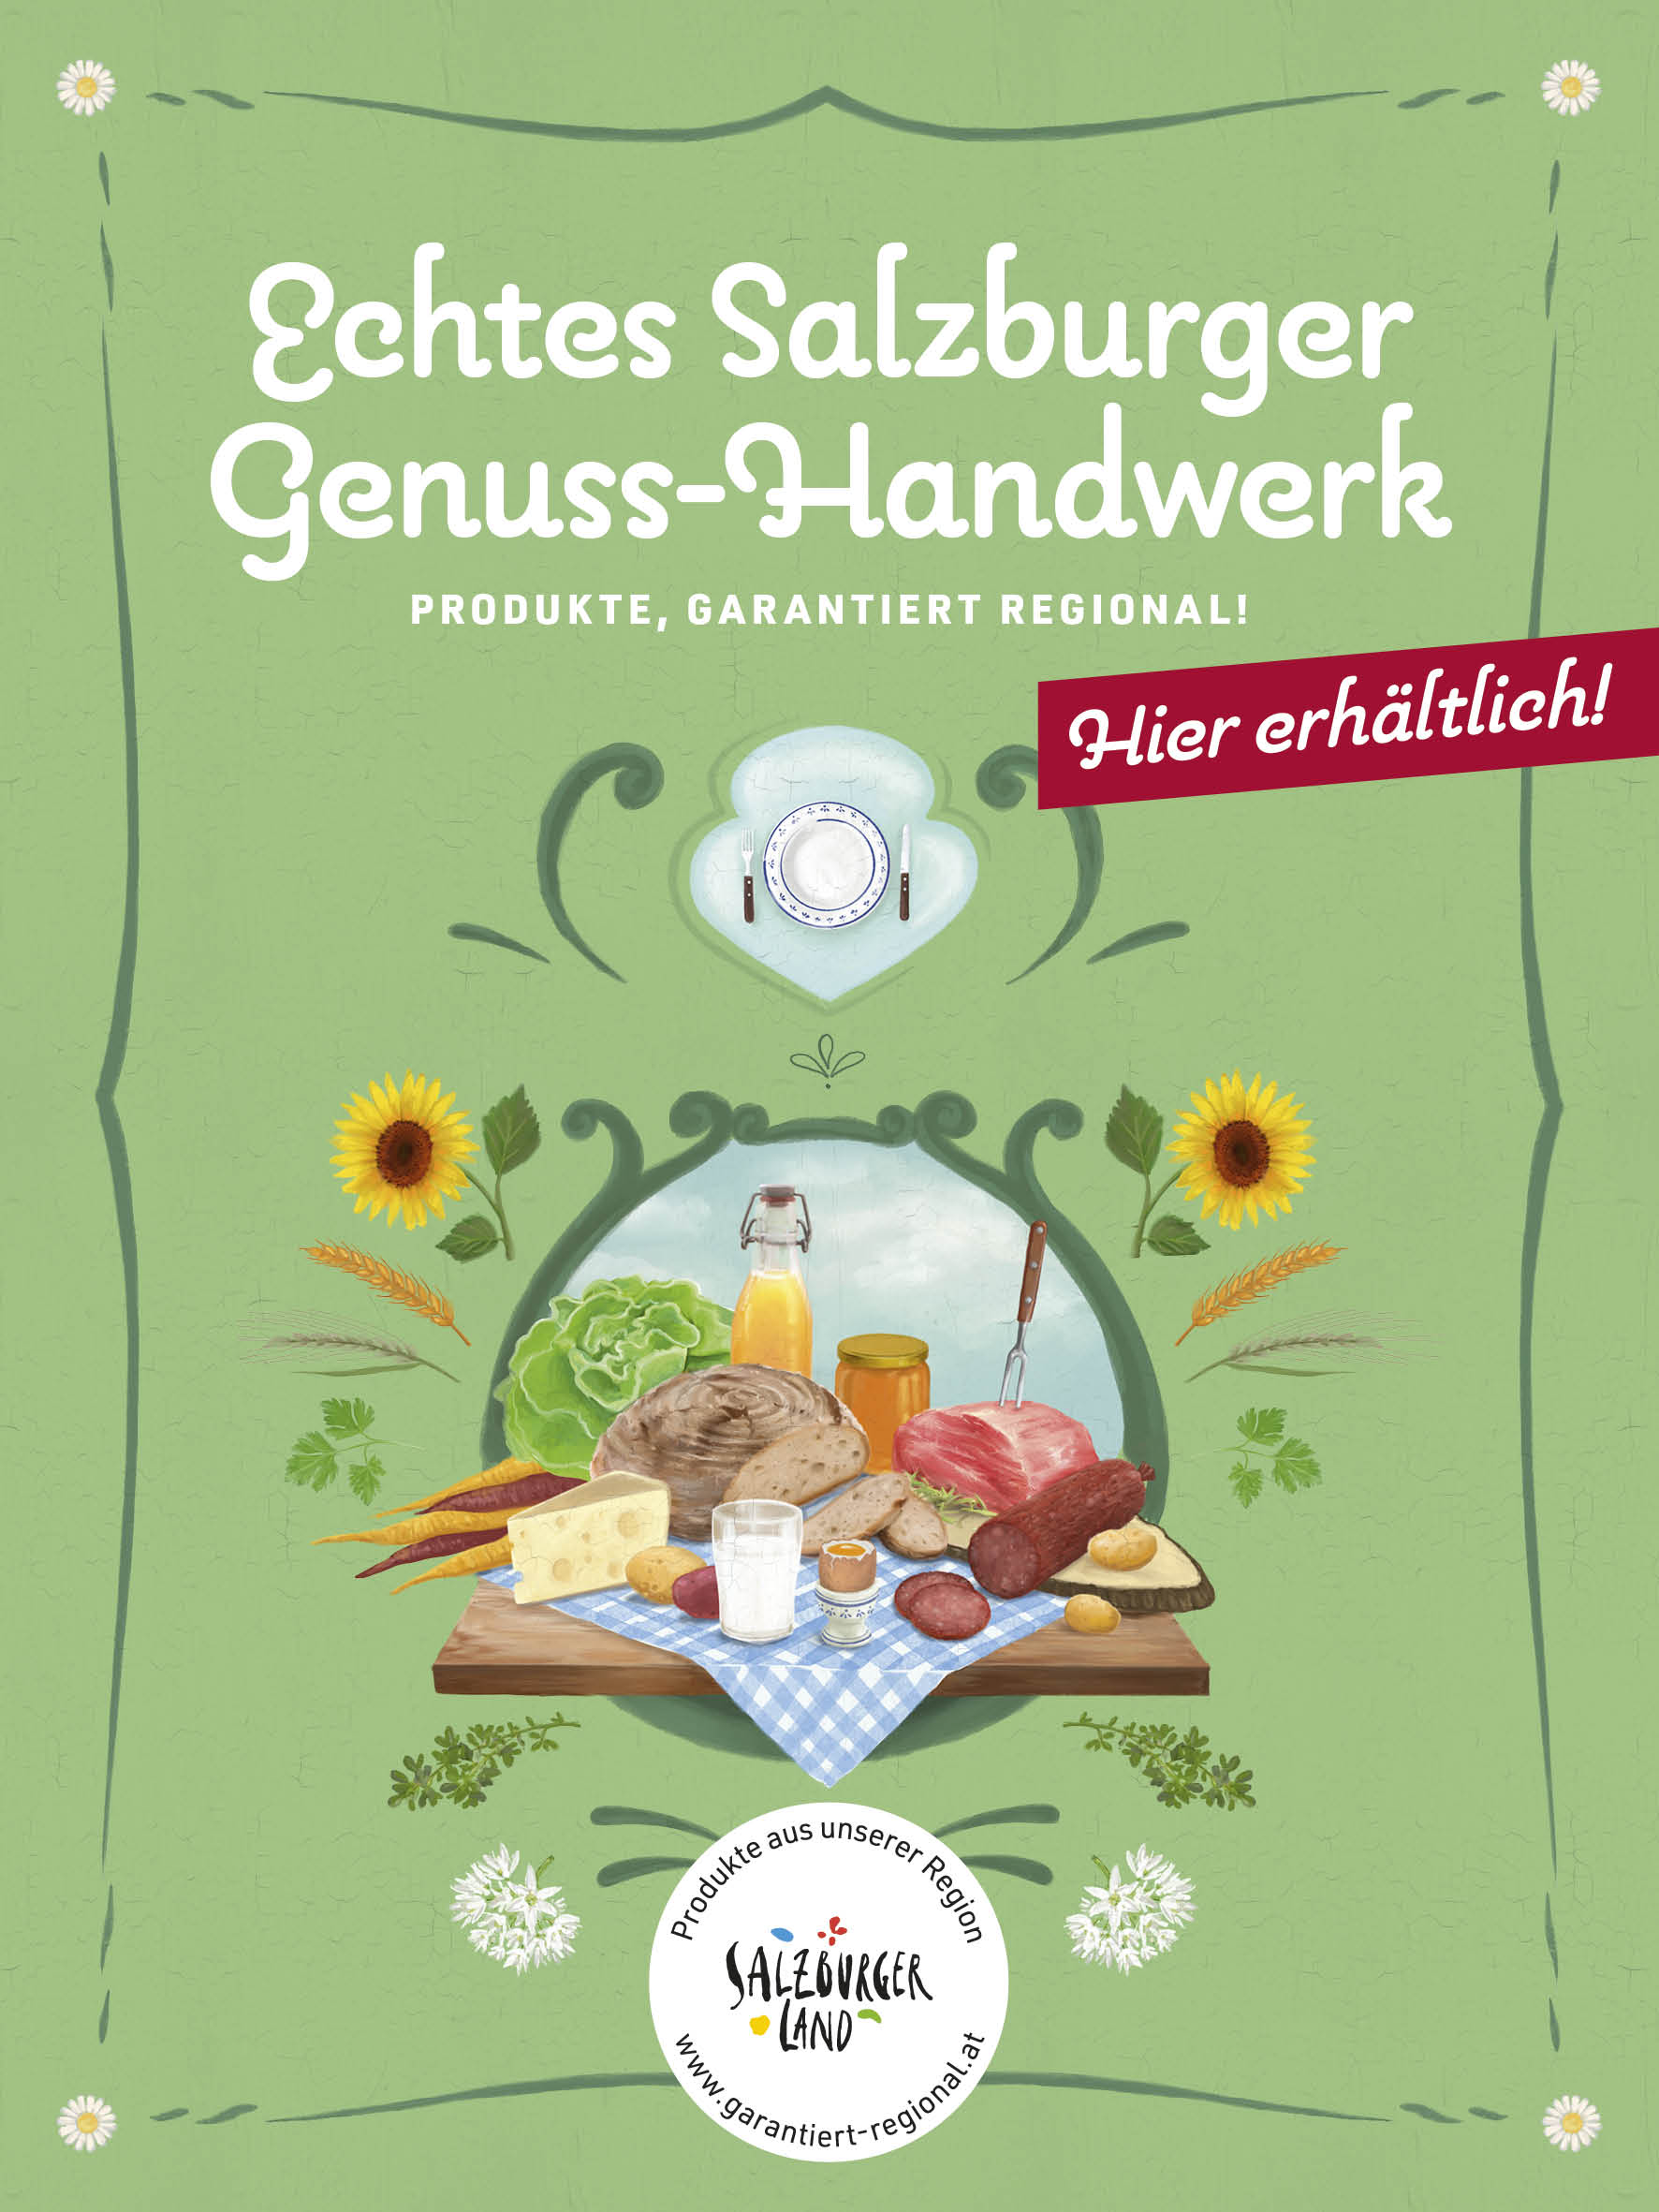 Lagerhaus Bergheim bei Salzburg schmeckt